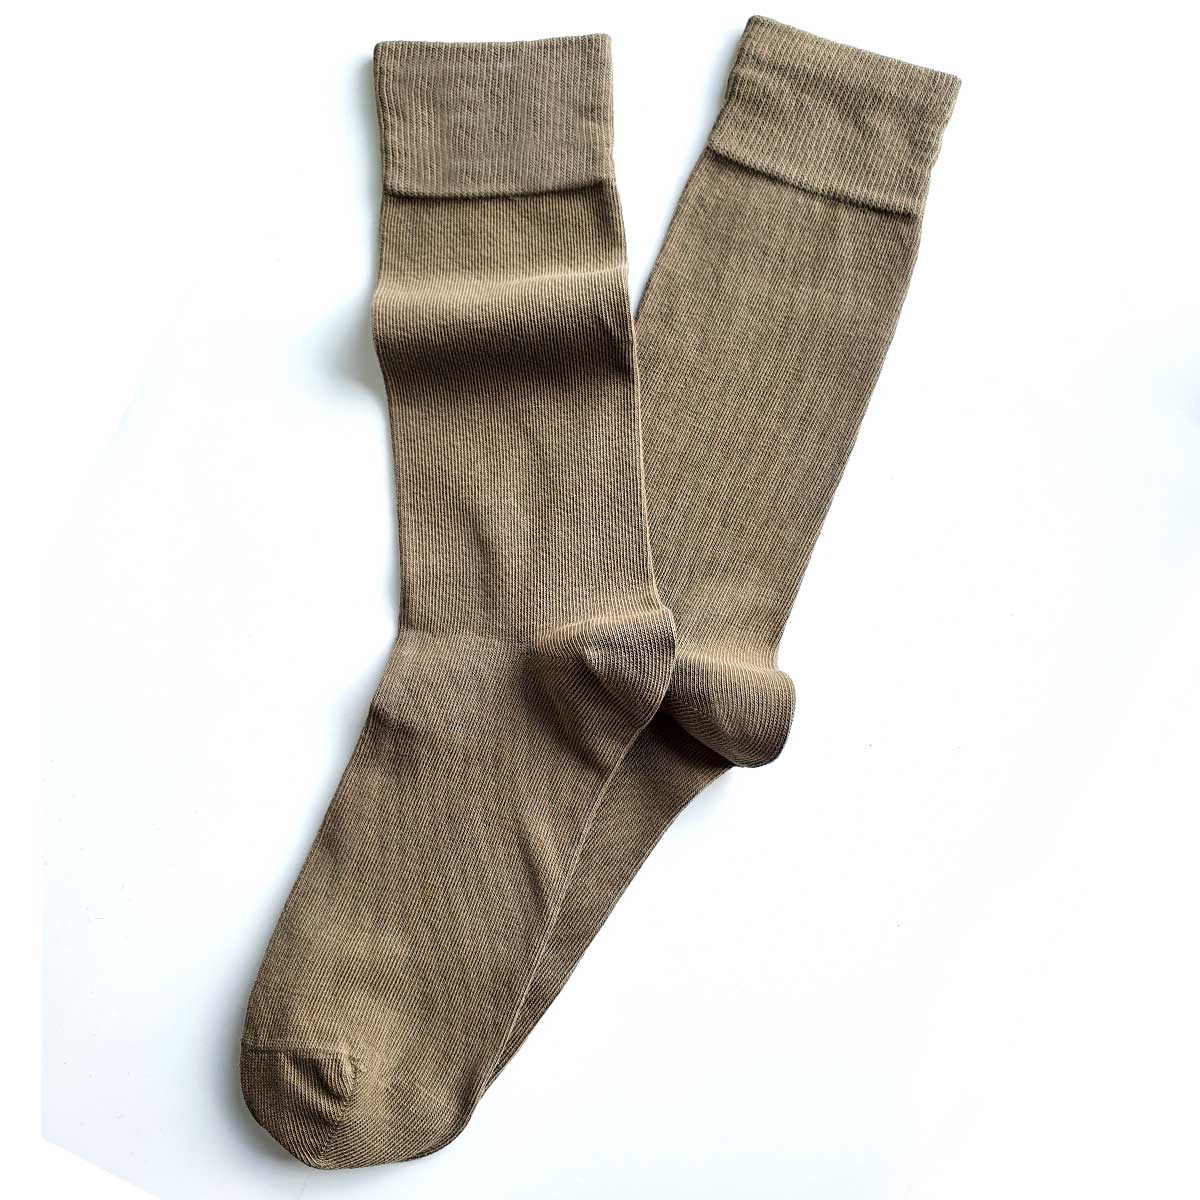 Soft 80% organic cotton socks for men in colours